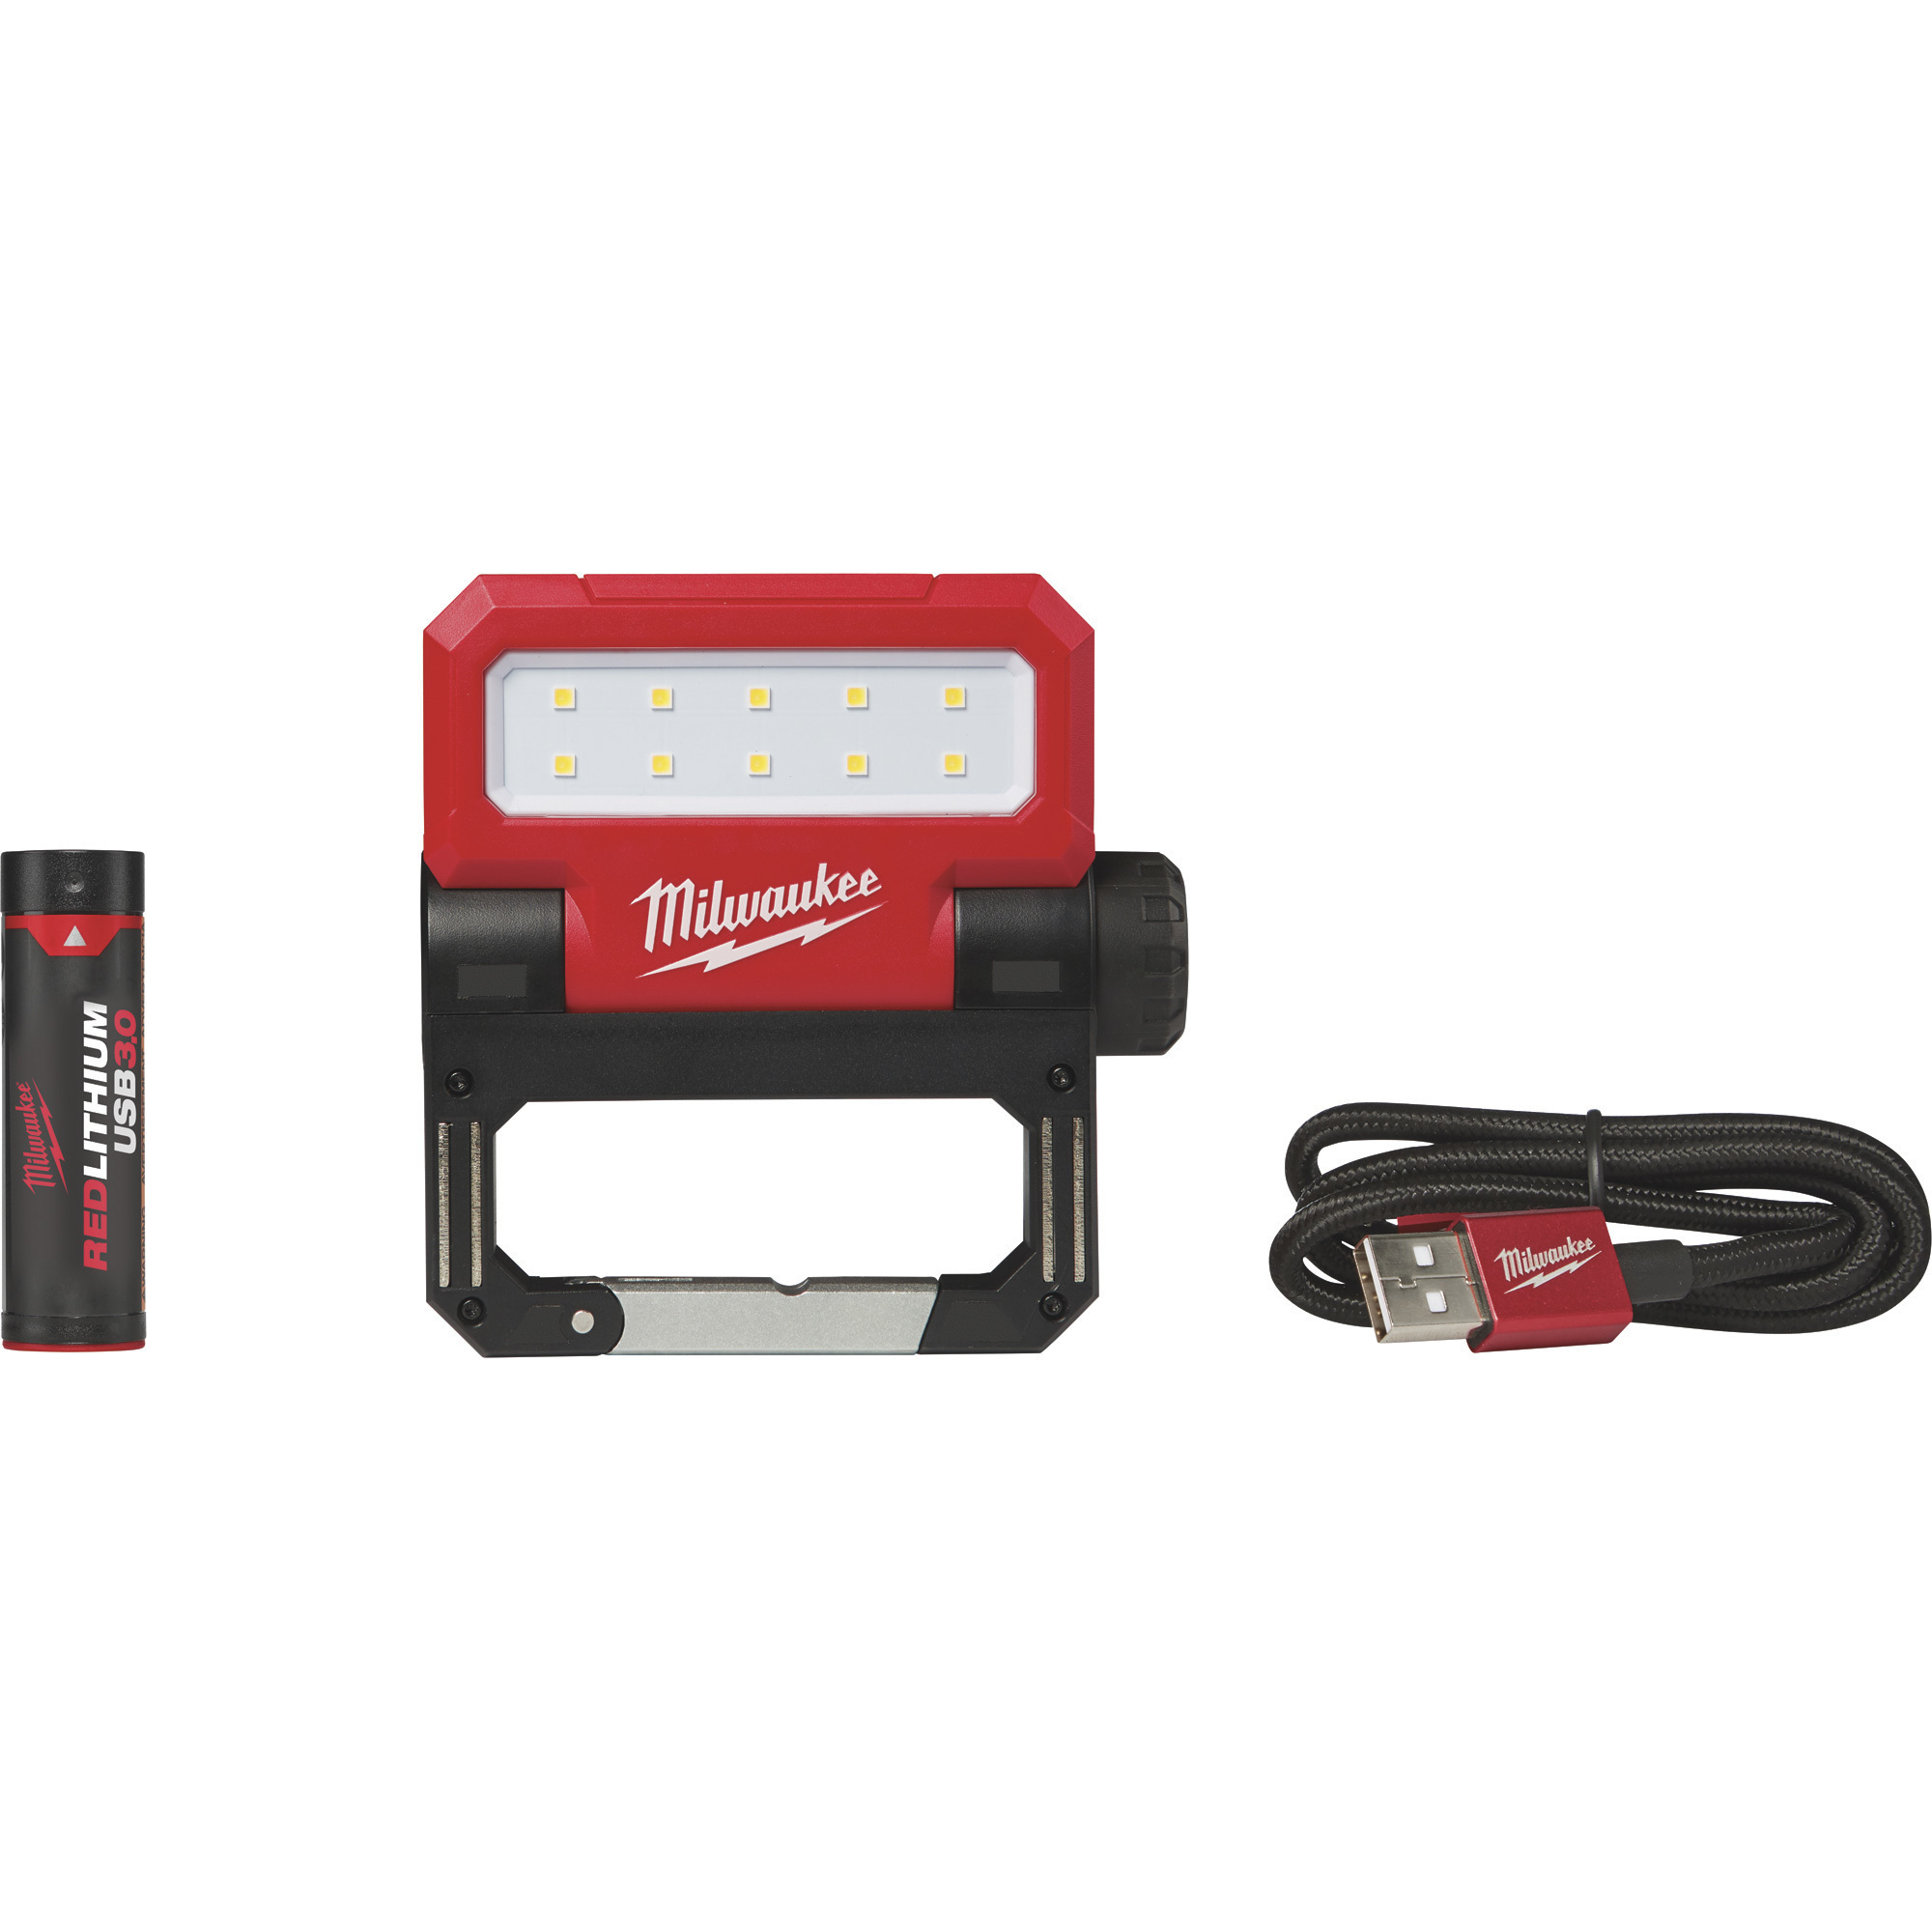 Milwaukee USB Rechargeable Rover Pivoting Flood Light, 550 Lumens, Model 2114-21